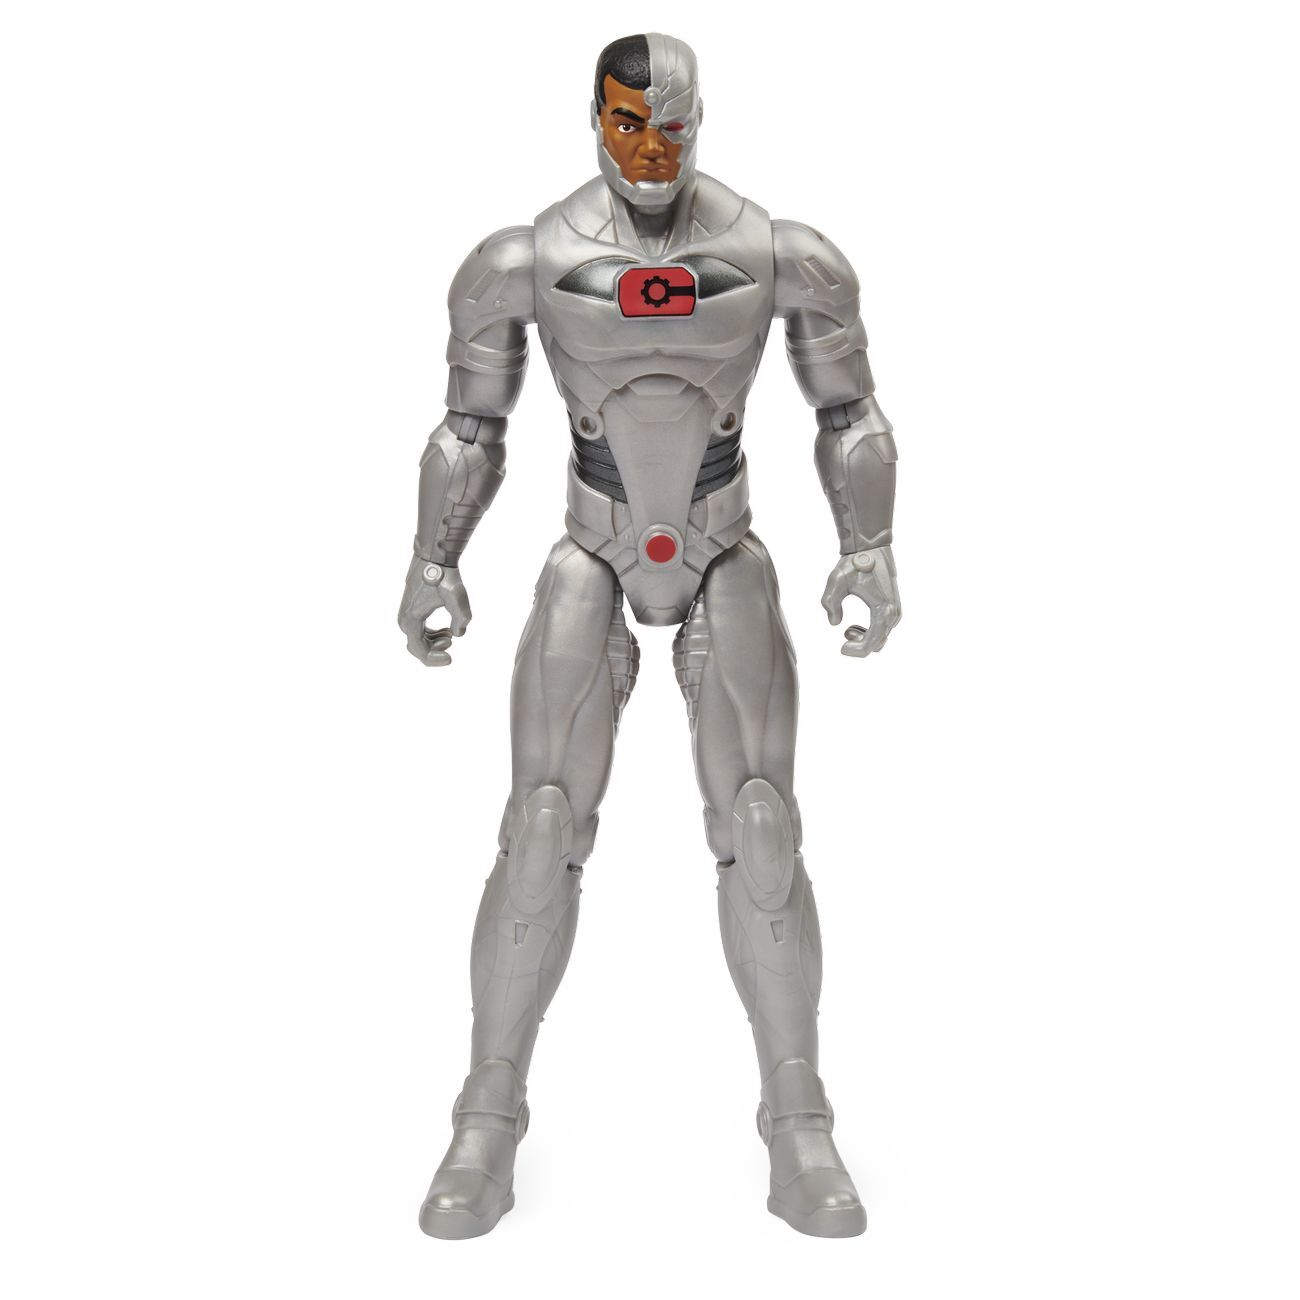 DC Comics Action Figure - Cyborg